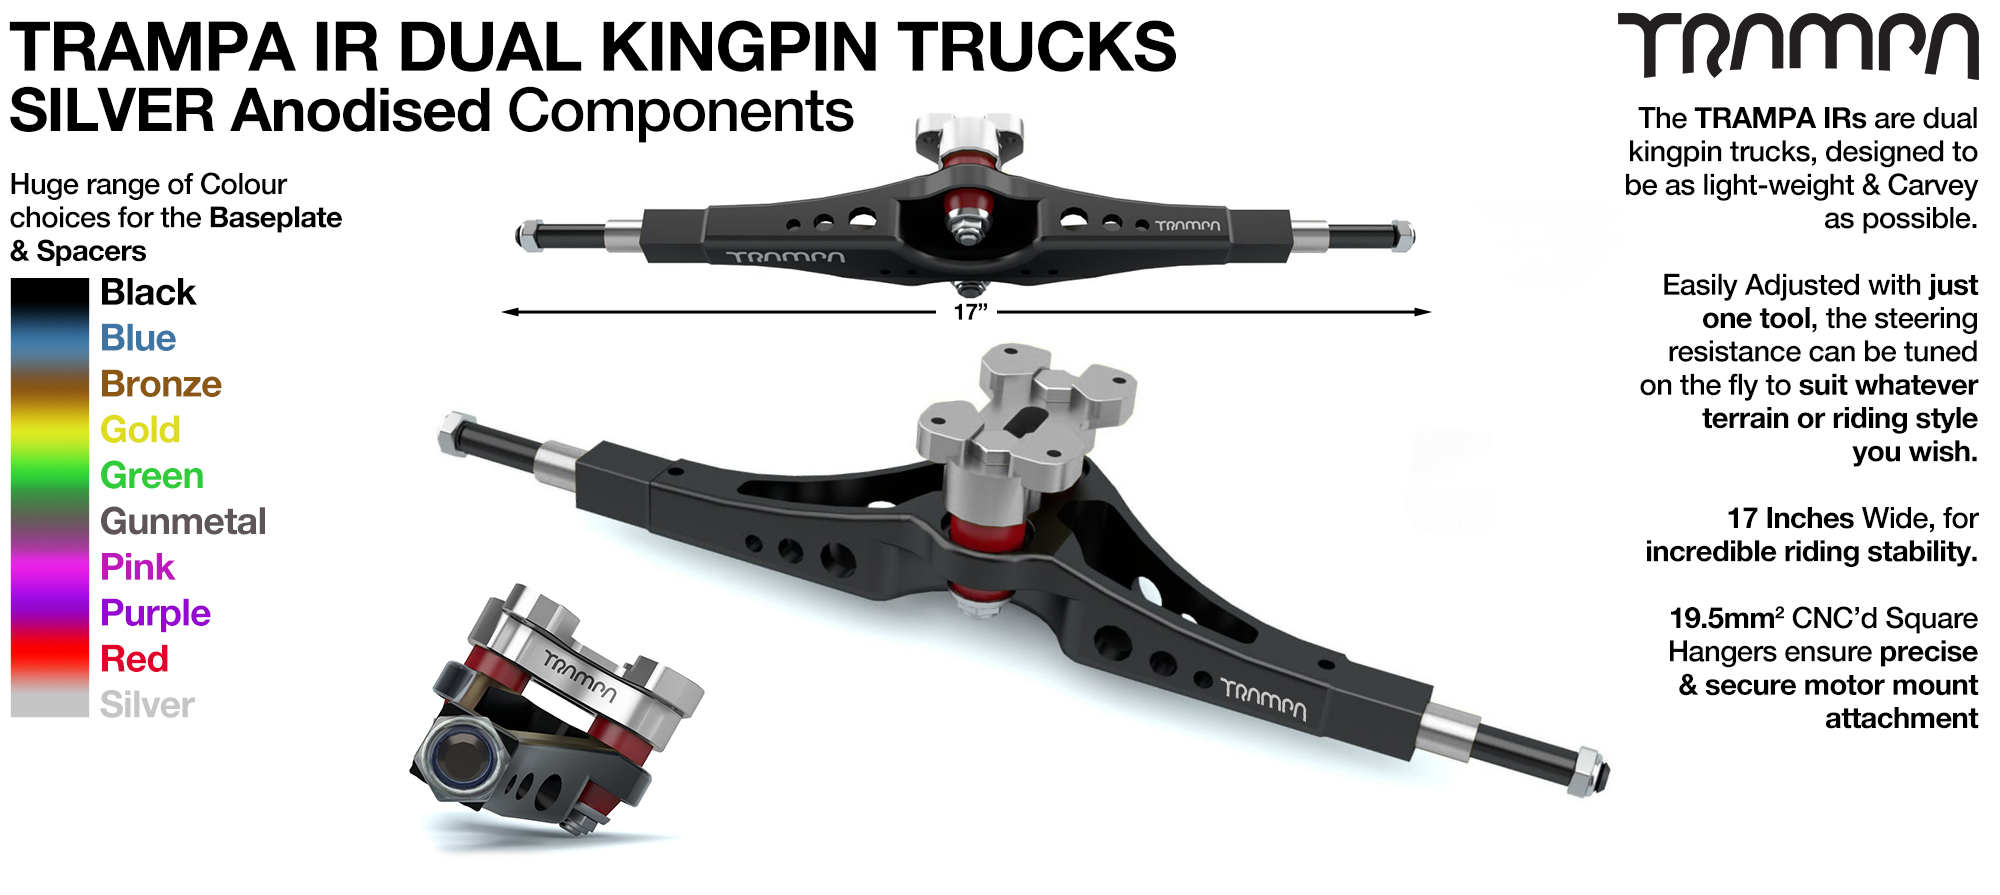 TRAMPA IR Double Kingpinned Skate Style Trucks fit every 19.1mm Motor Mount TRAMPA offers - SILVER